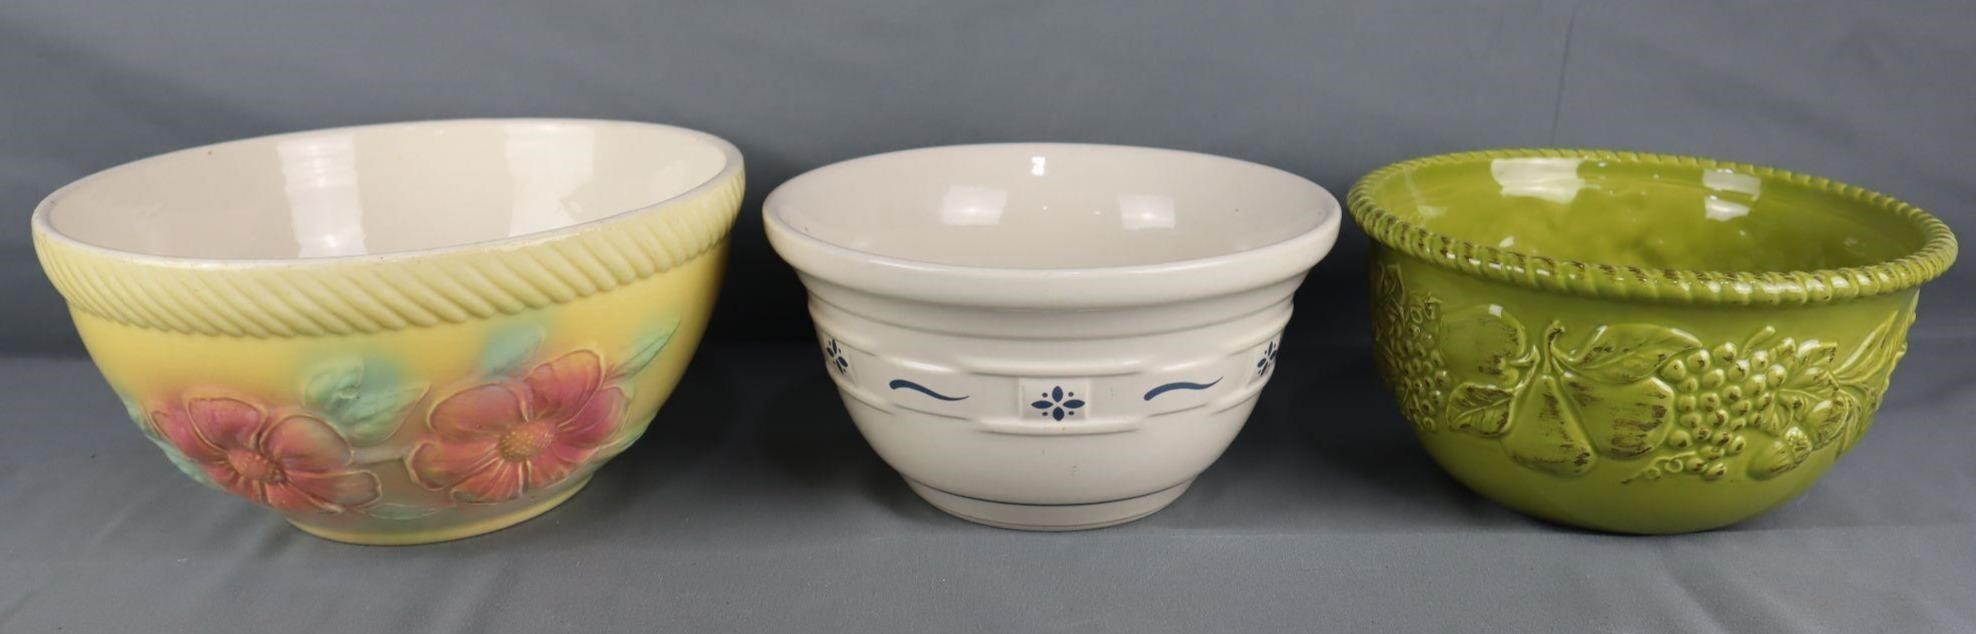 Longaberger Pottery & Vintage Mixing Bowls